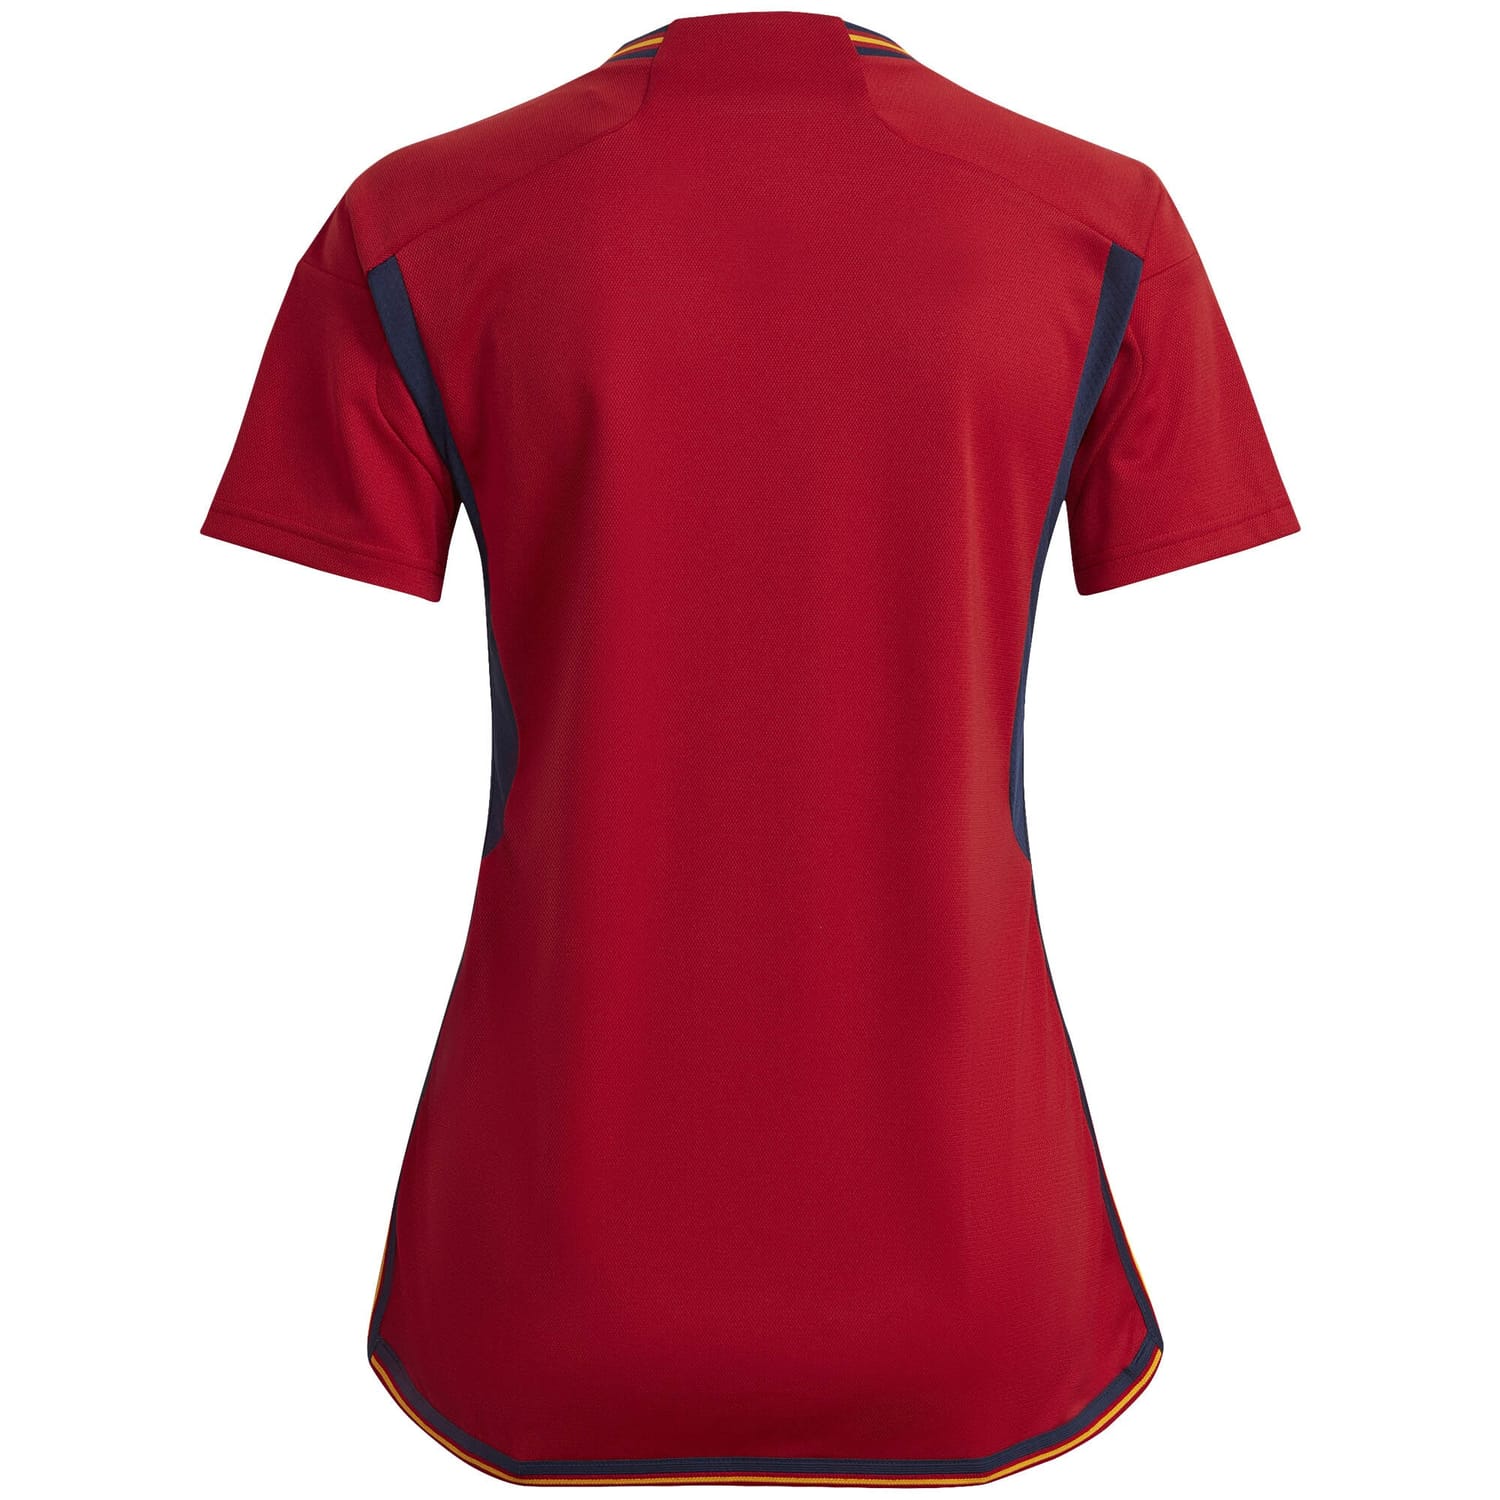 Spain National Team Home Jersey Shirt 2022 for Women